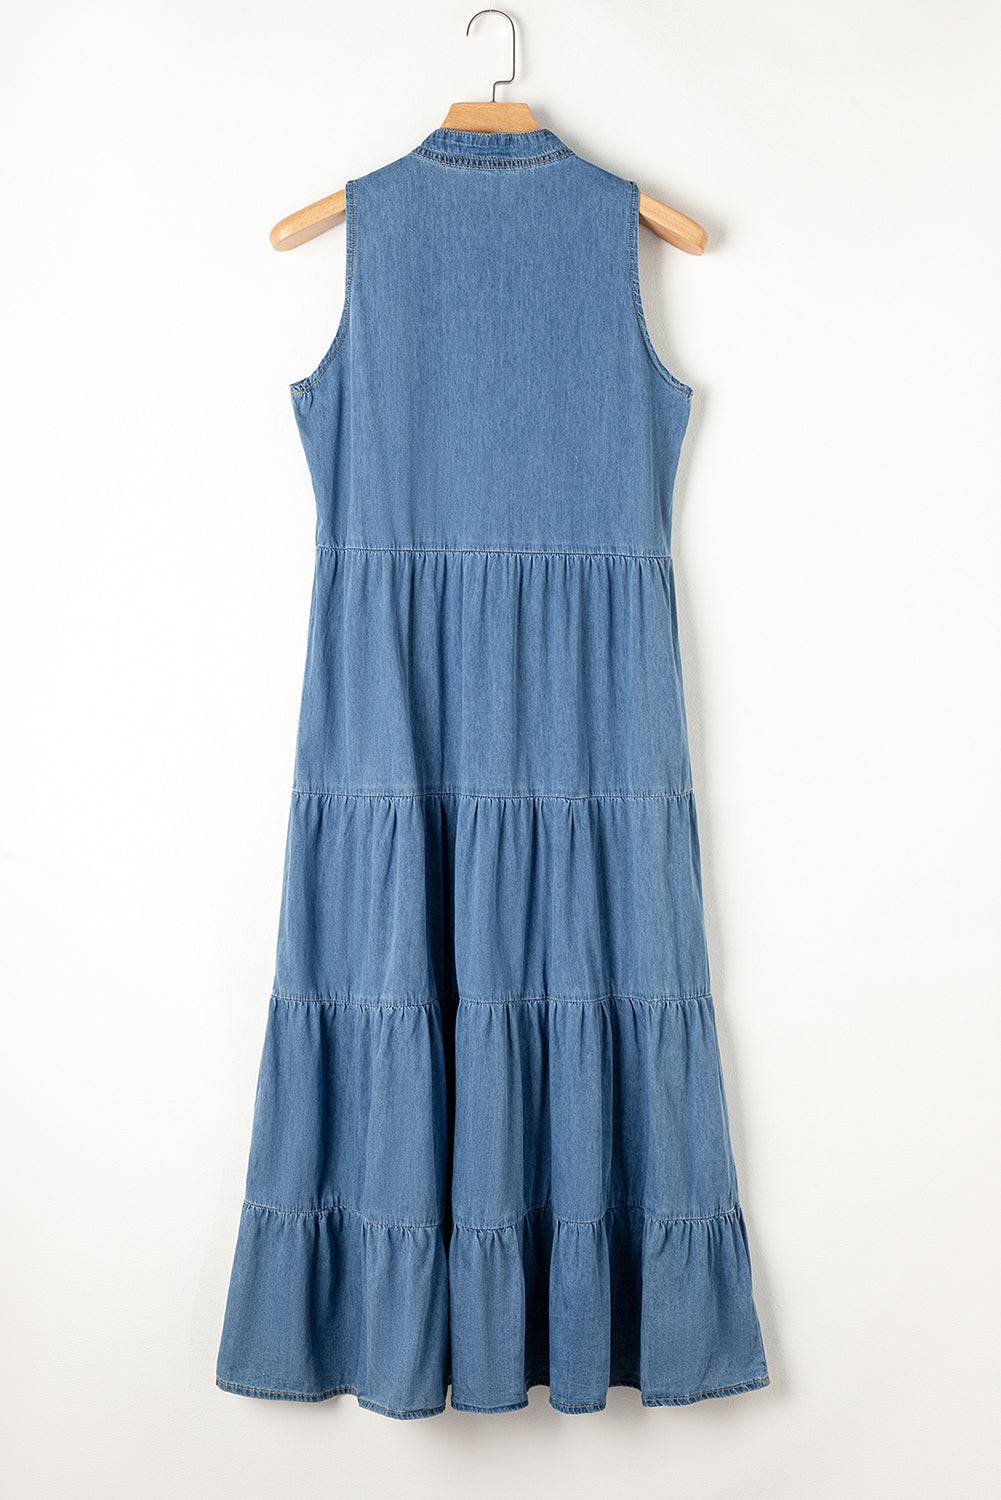 a blue dress hanging on a wooden hanger